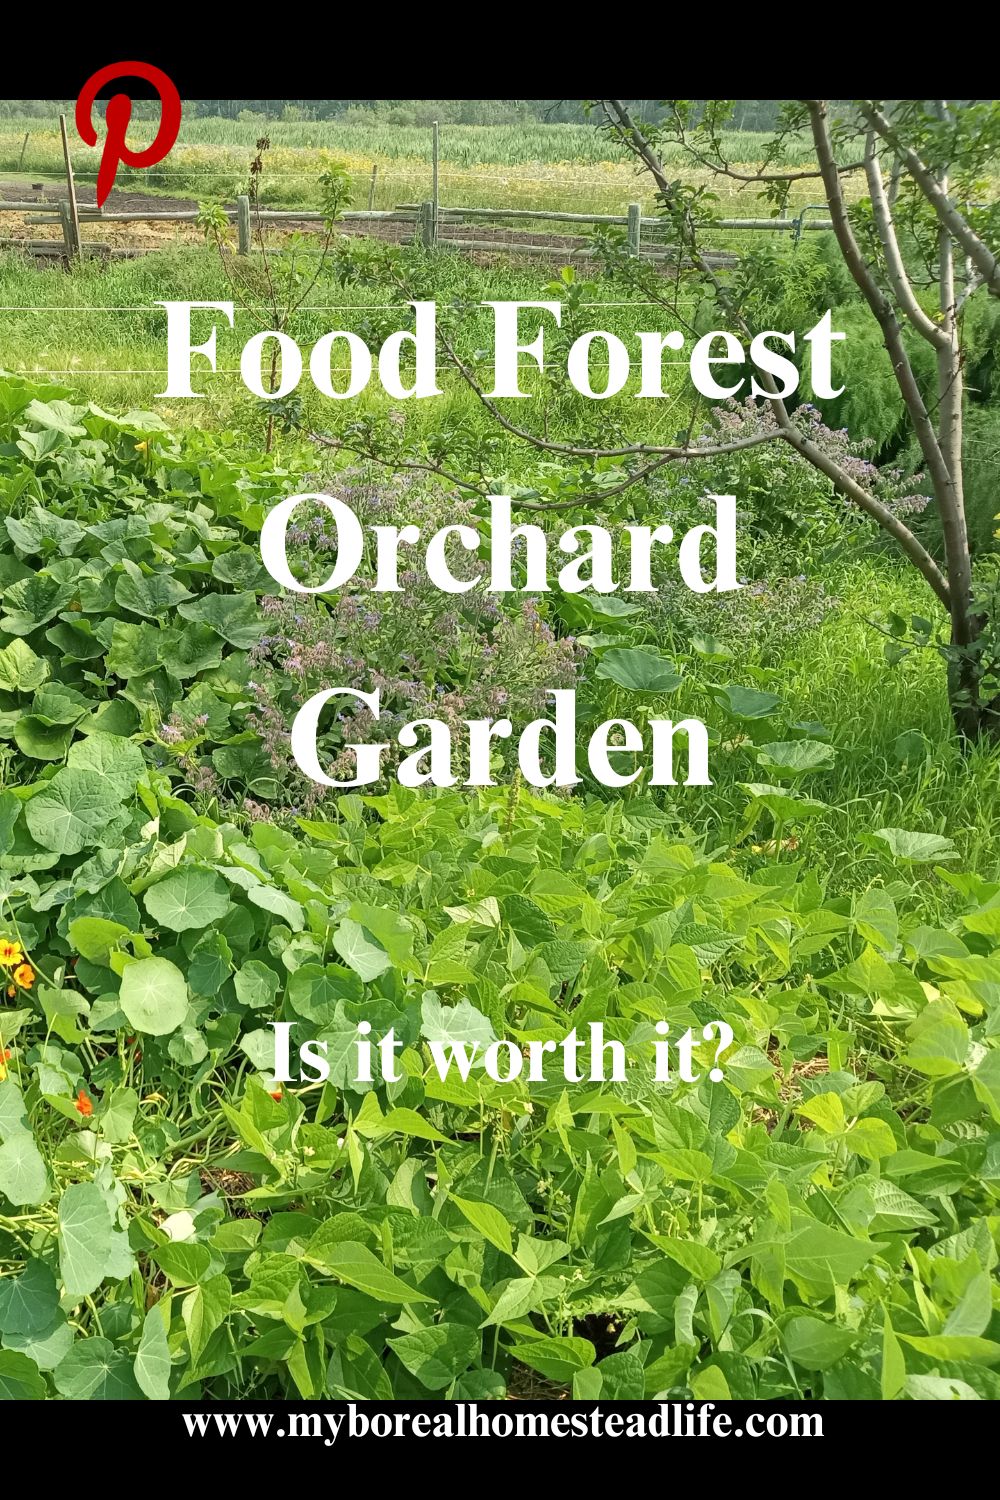 Food forest orchard garden - Pinterest